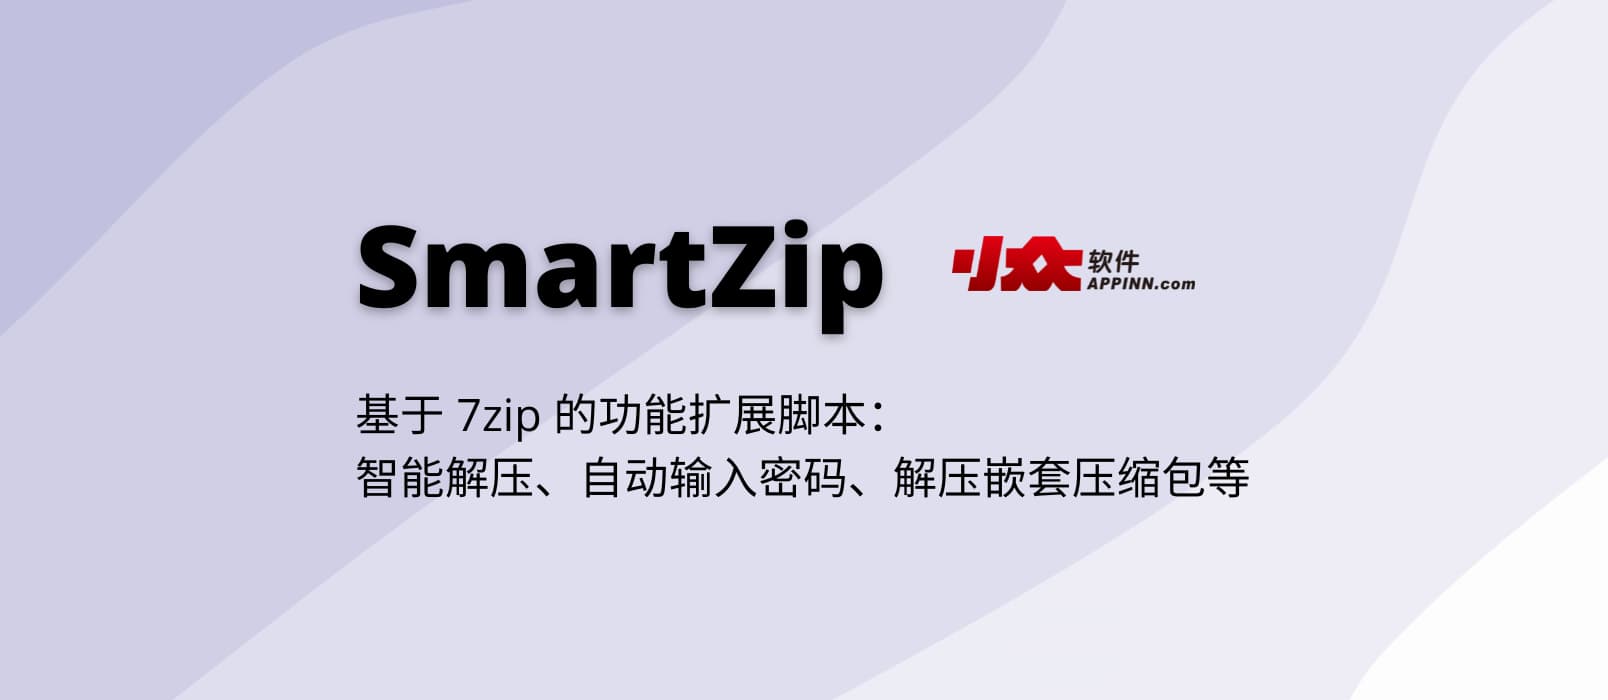  SmartZip - 7zip based function extension script: intelligent decompression, automatic password input, decompression of nested compressed packages, etc